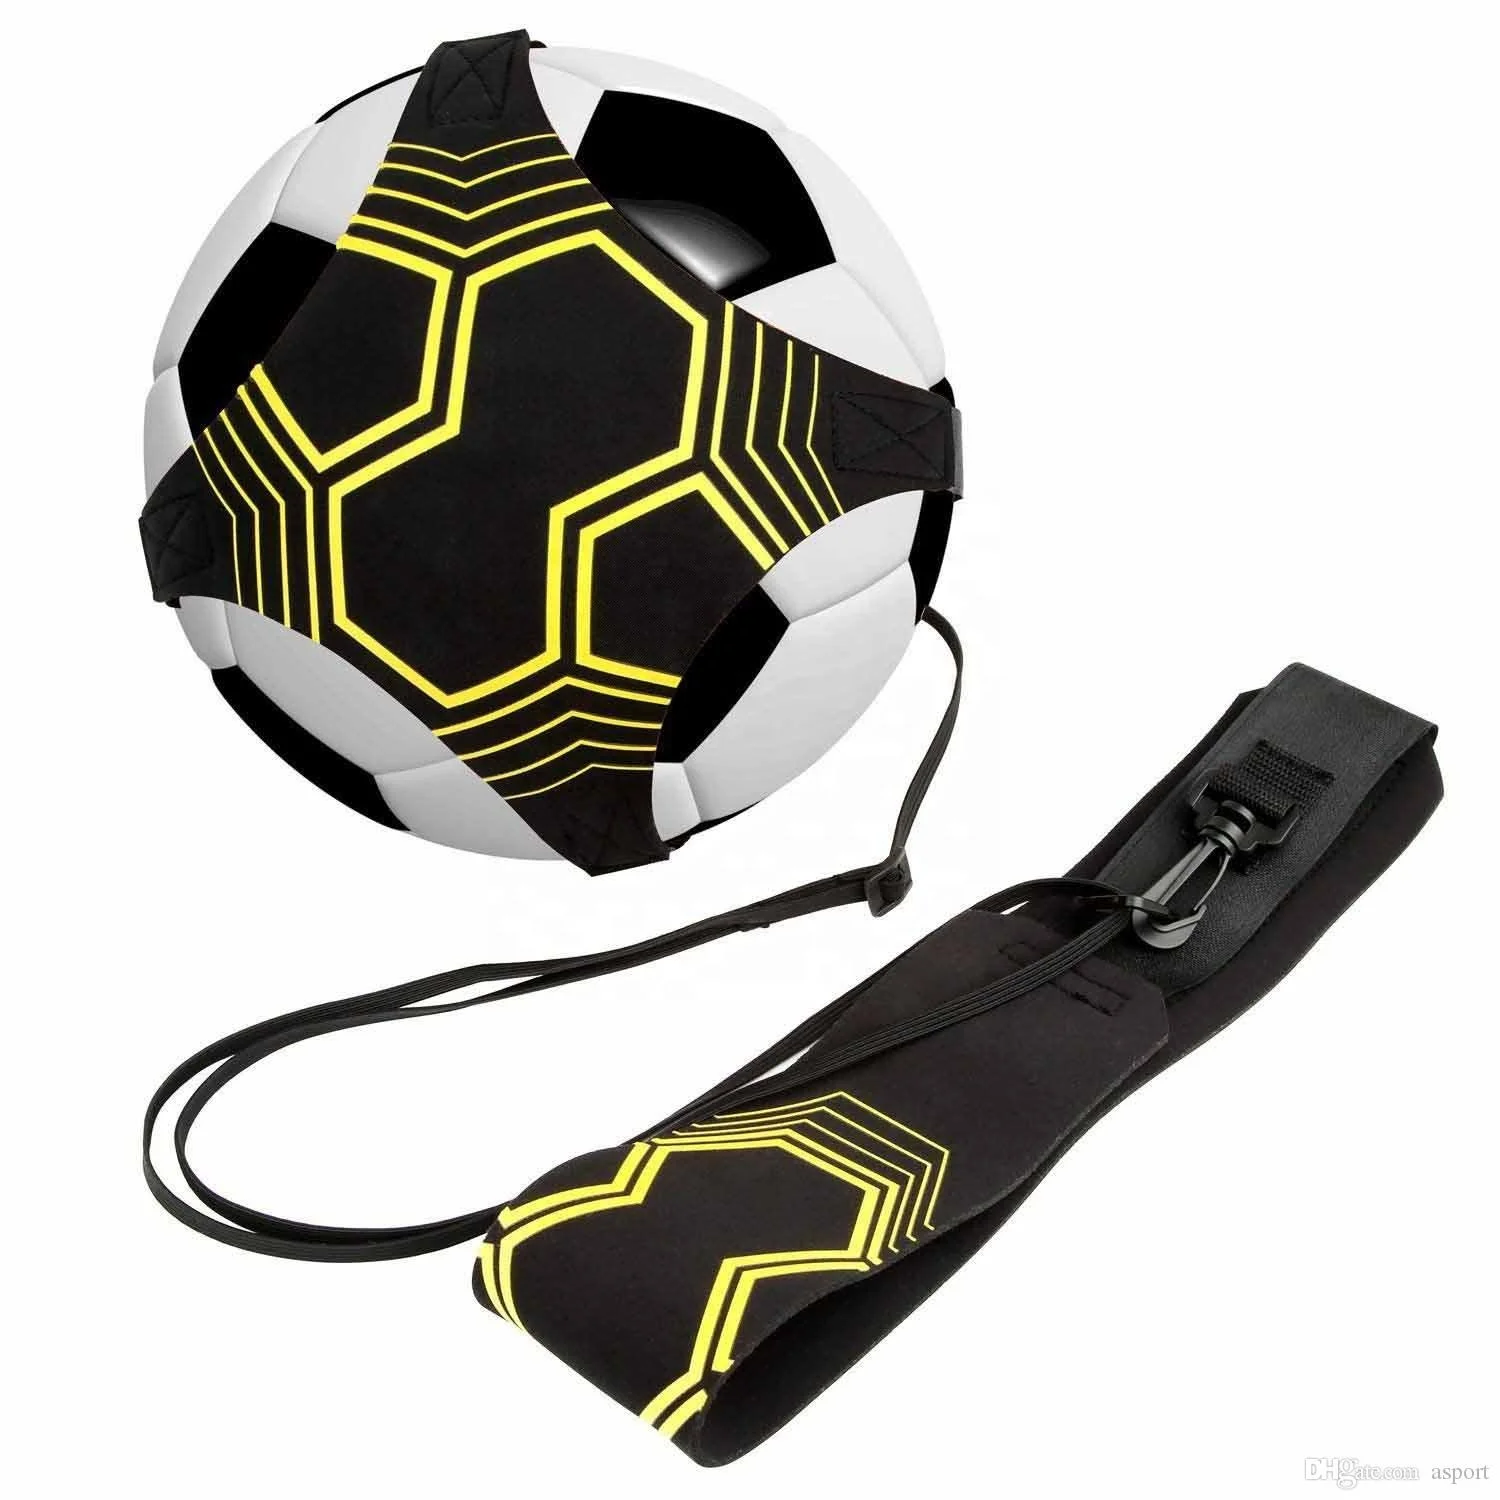 

OEM Fit balls 3 4 5 adjustable kick solo soccer trainer training equipment for kids and adult soccer skills improvement, Custom color